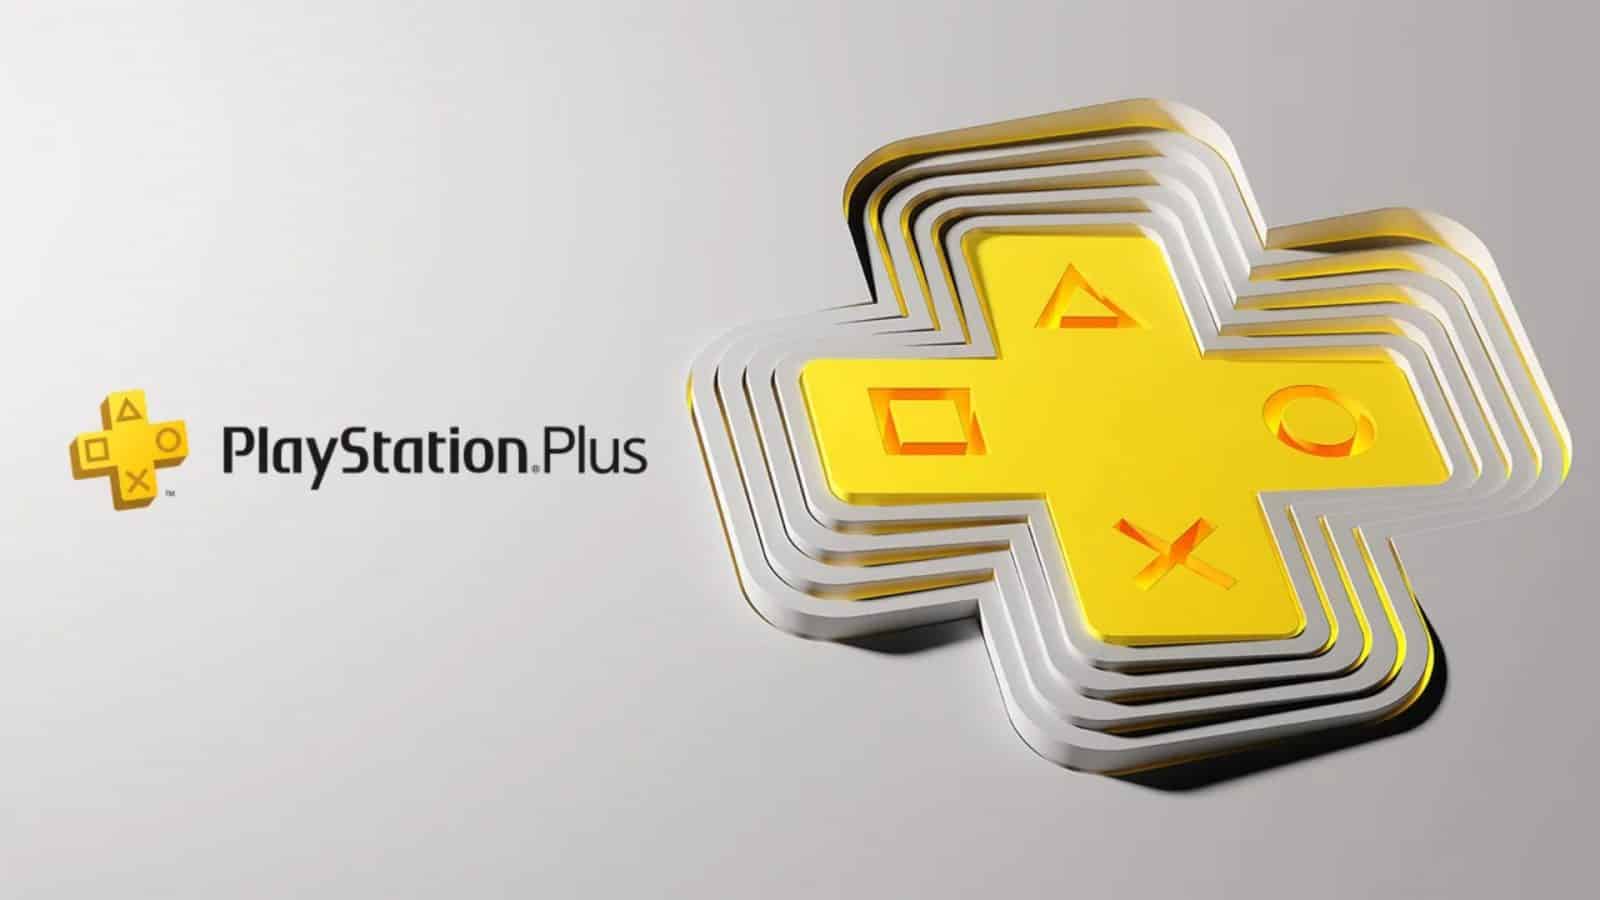 Is PlayStation Plus Extra/Premium worth it? (2023)